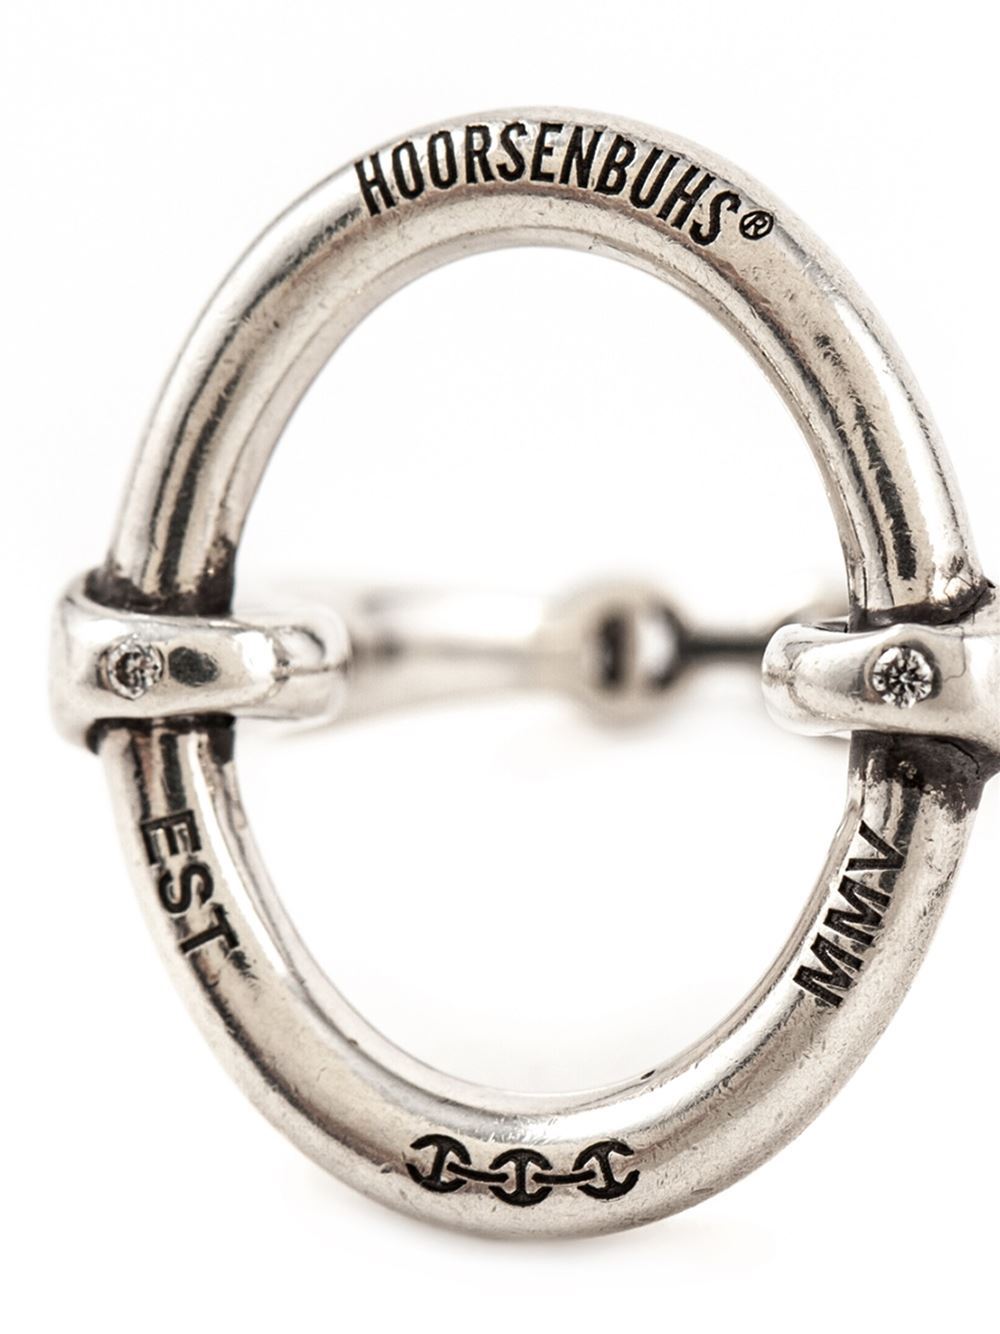 Hoorsenbuhs 'Ss' Oval Ring in Silver (metallic) | Lyst